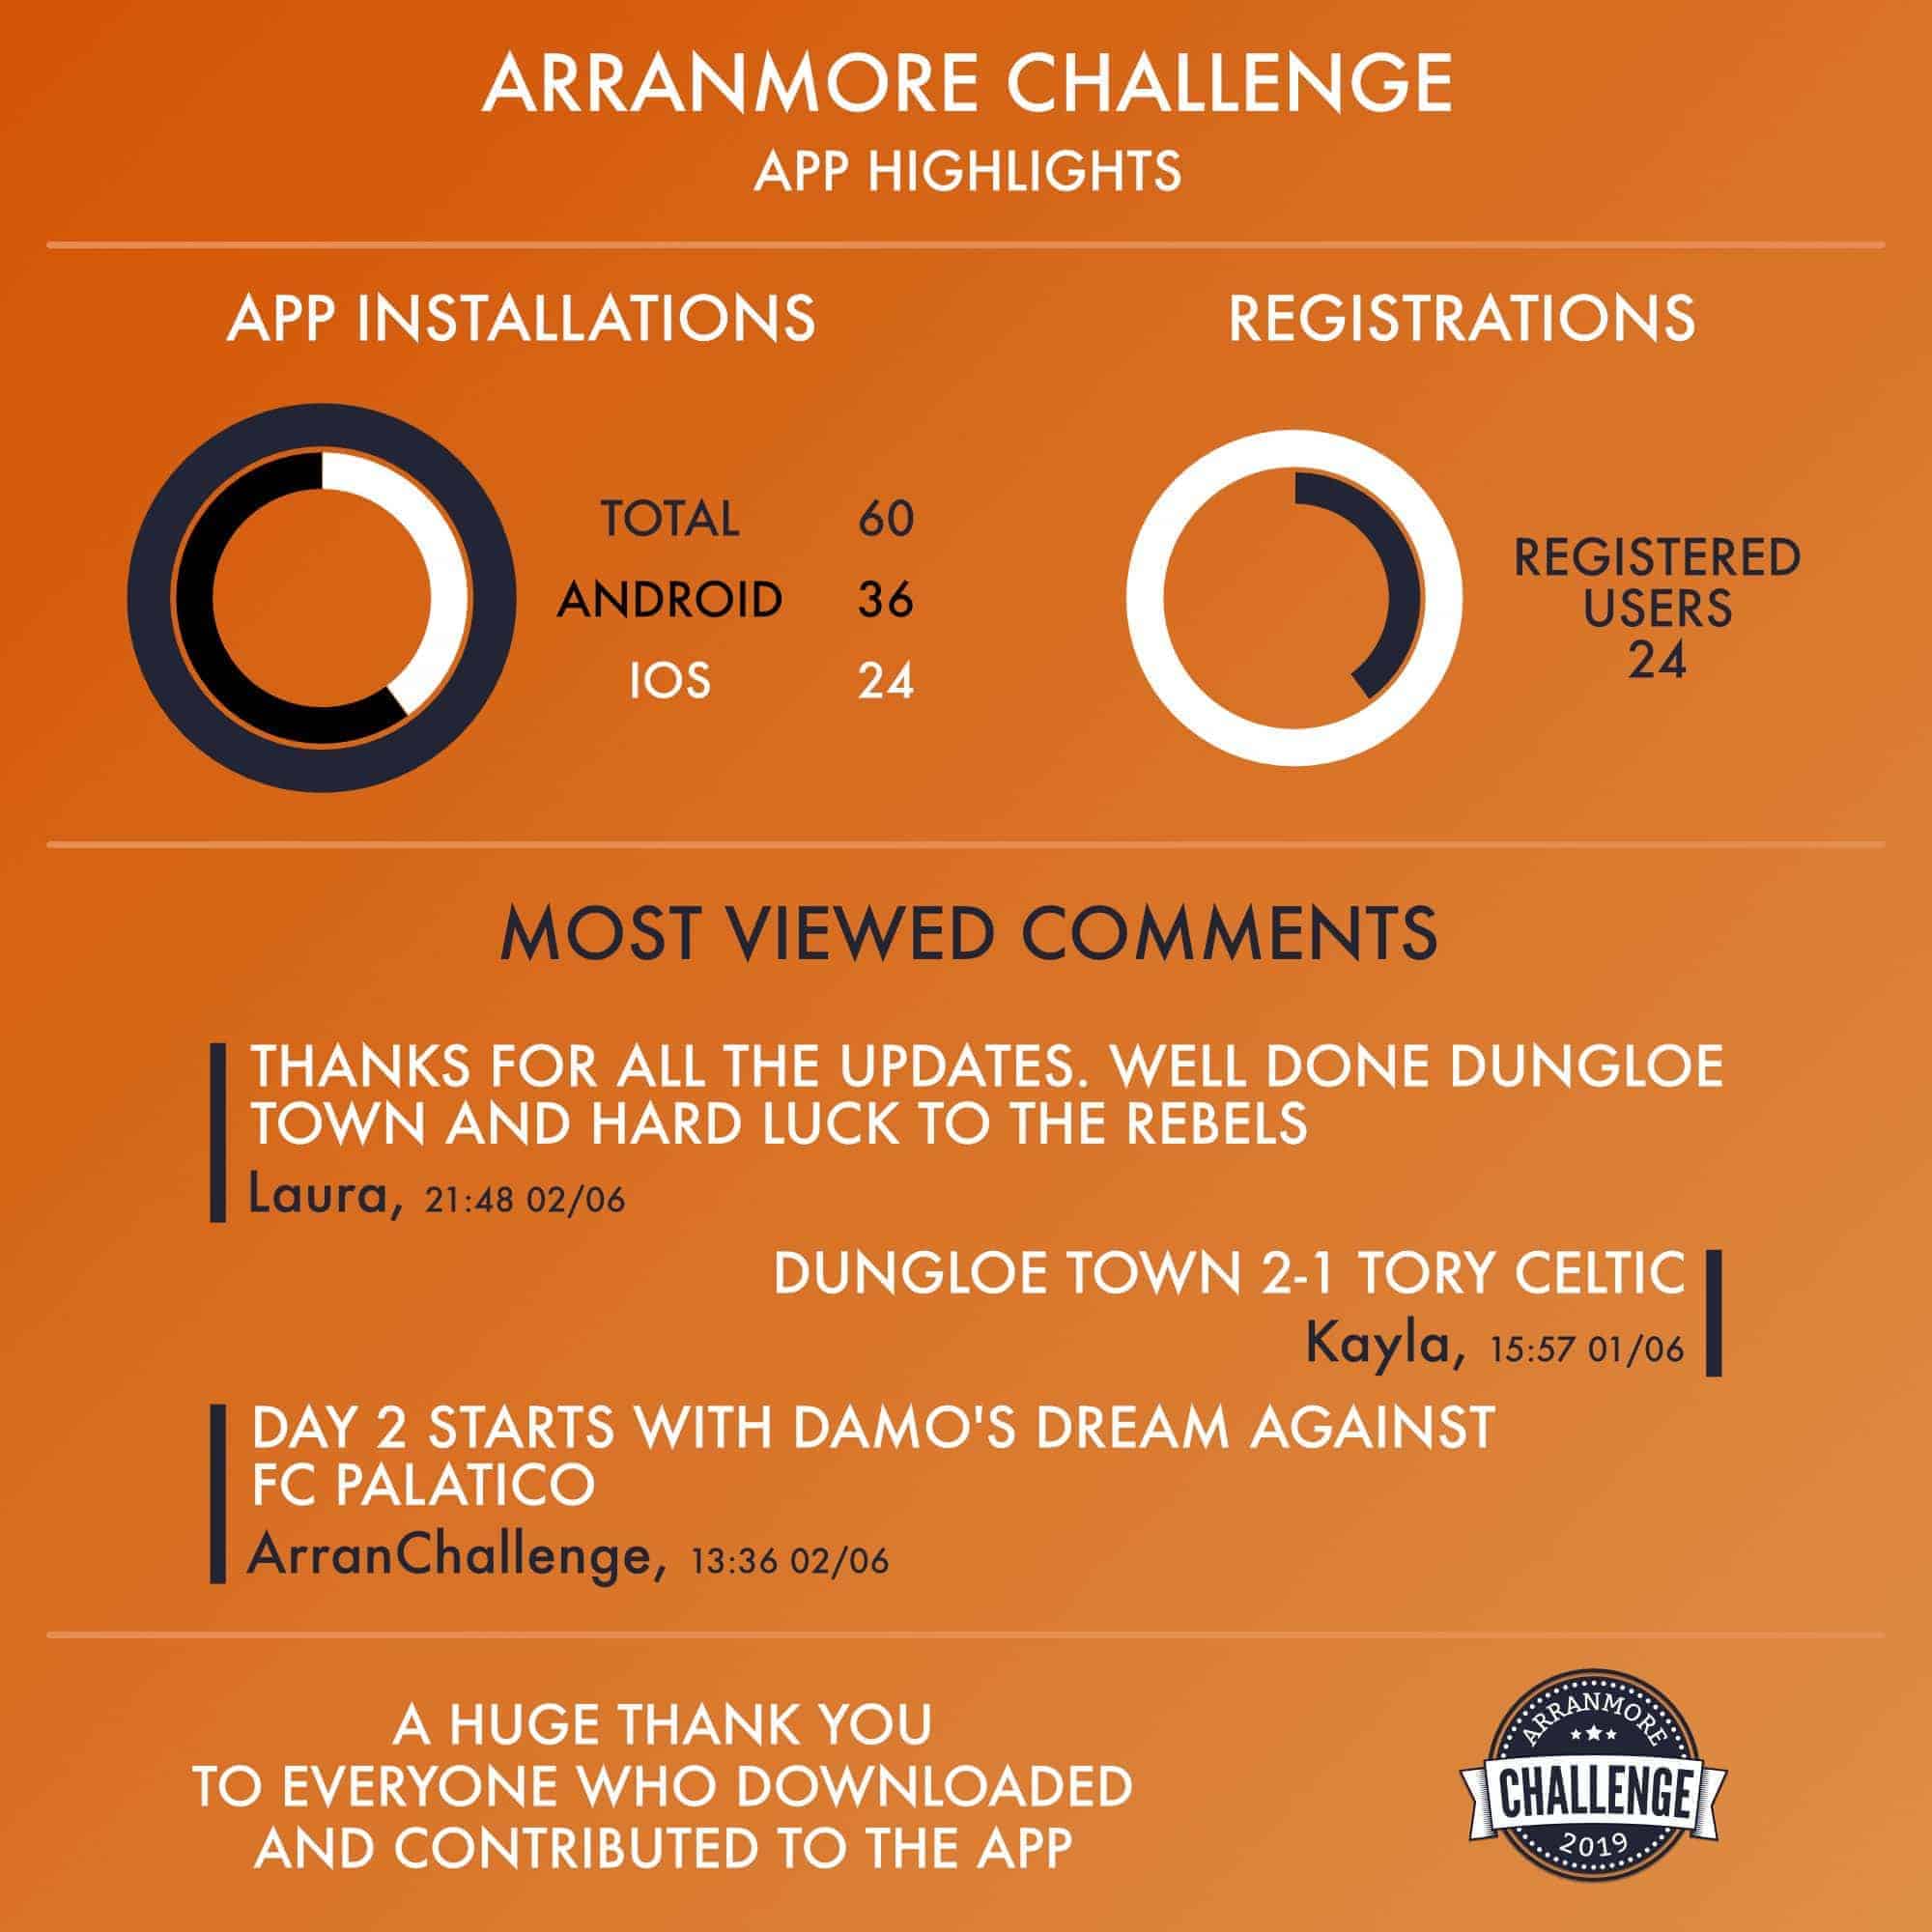 Arranmore Challenge App highlights